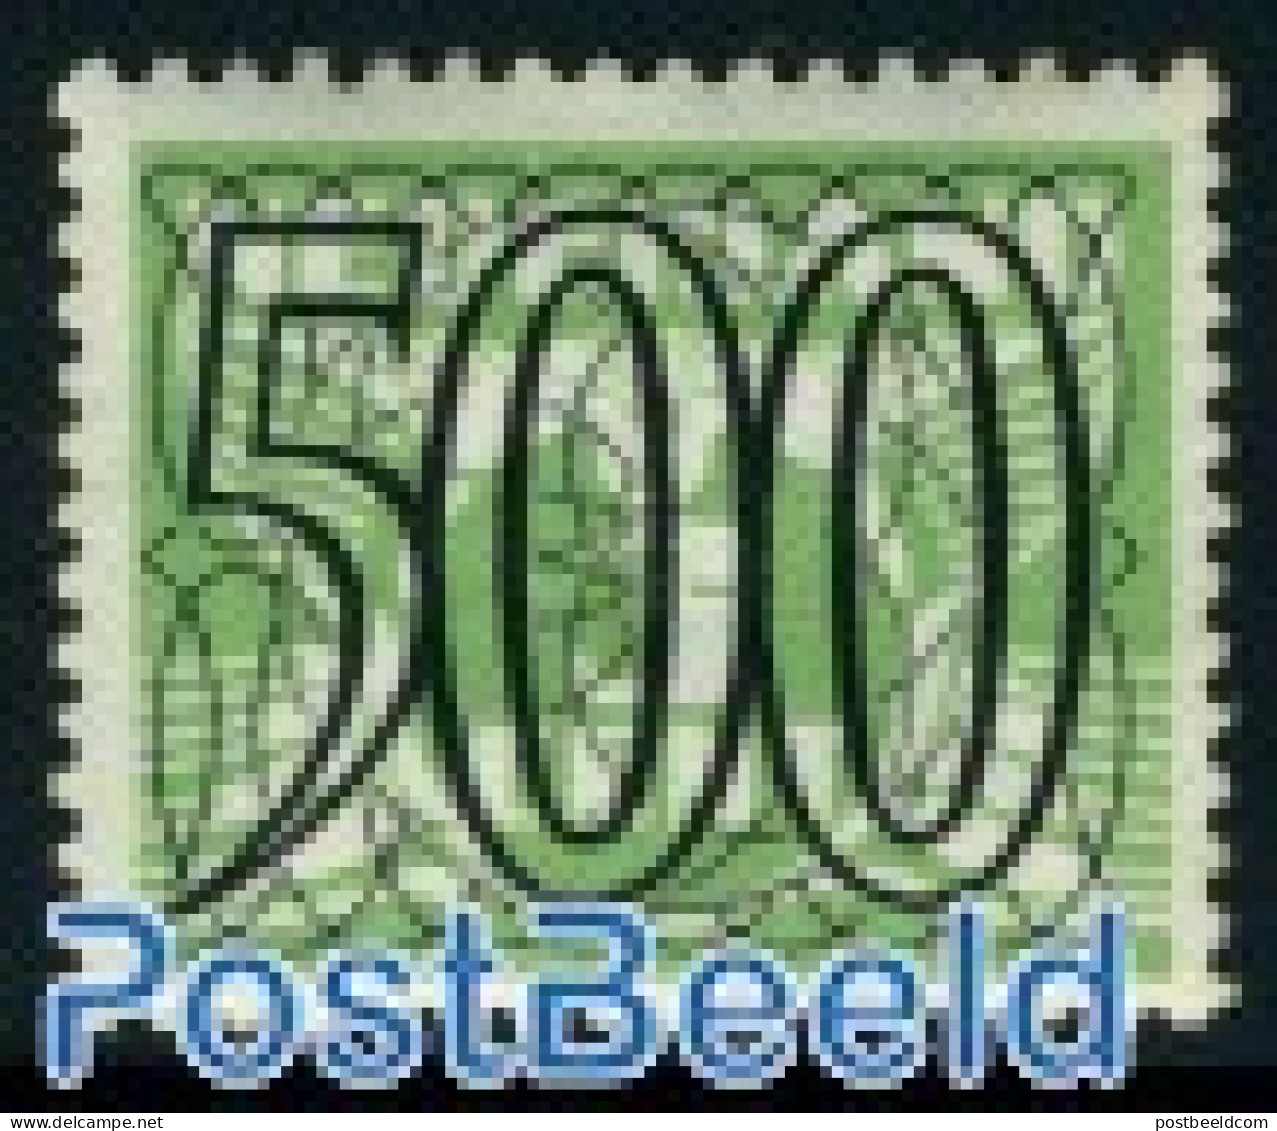 Netherlands 1940 500c, Stamp Out Of Set, Unused (hinged) - Ongebruikt